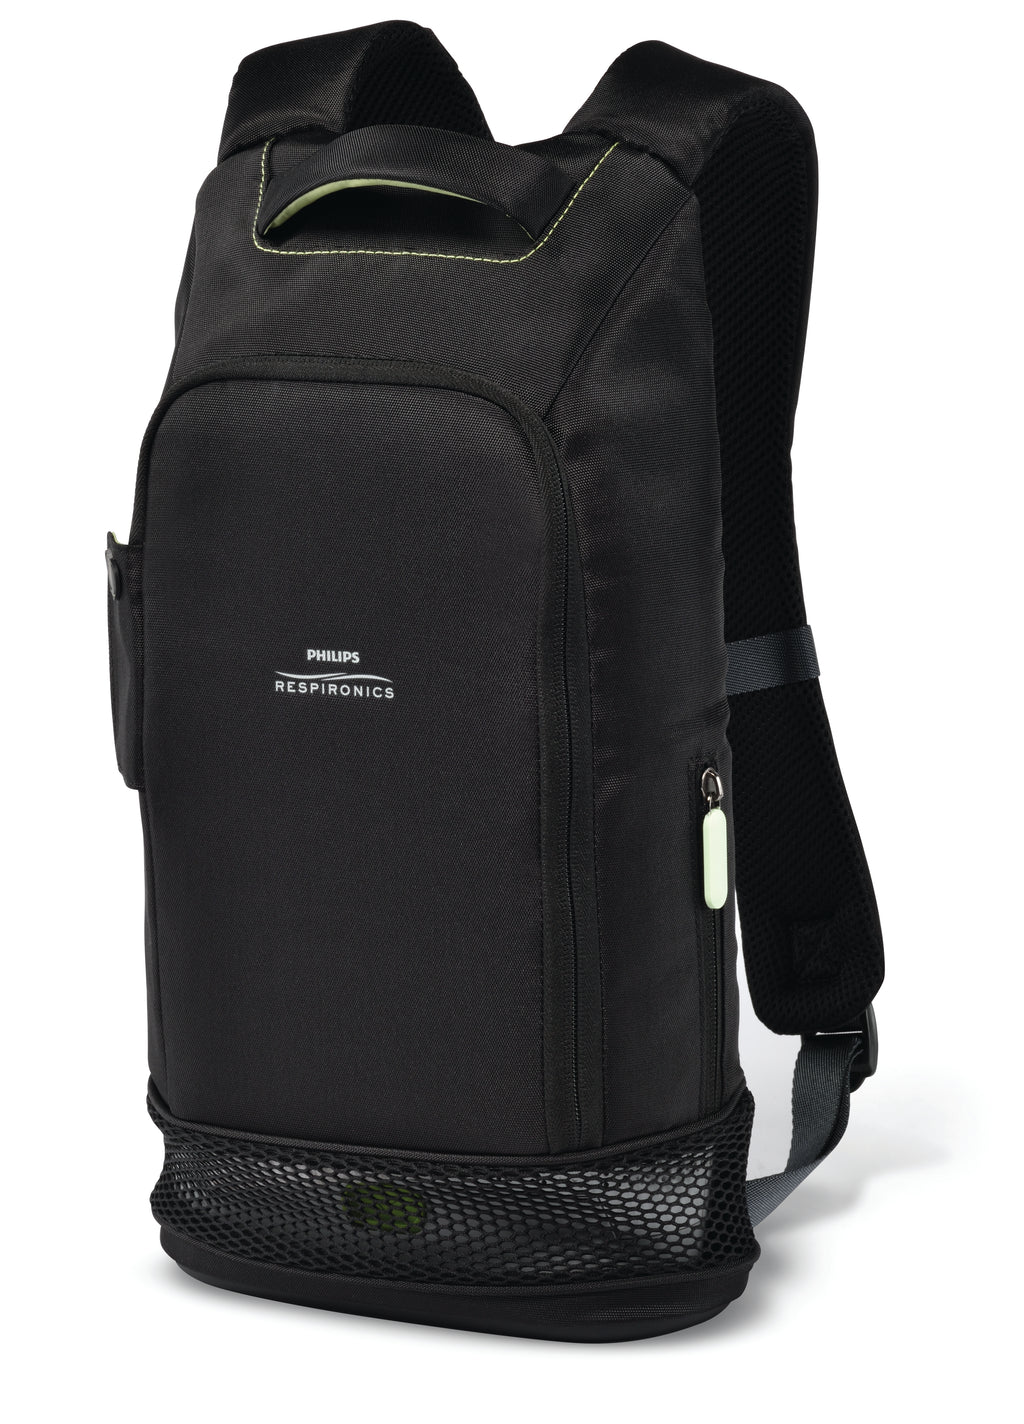 Respironics Simply GO Mini Backpack